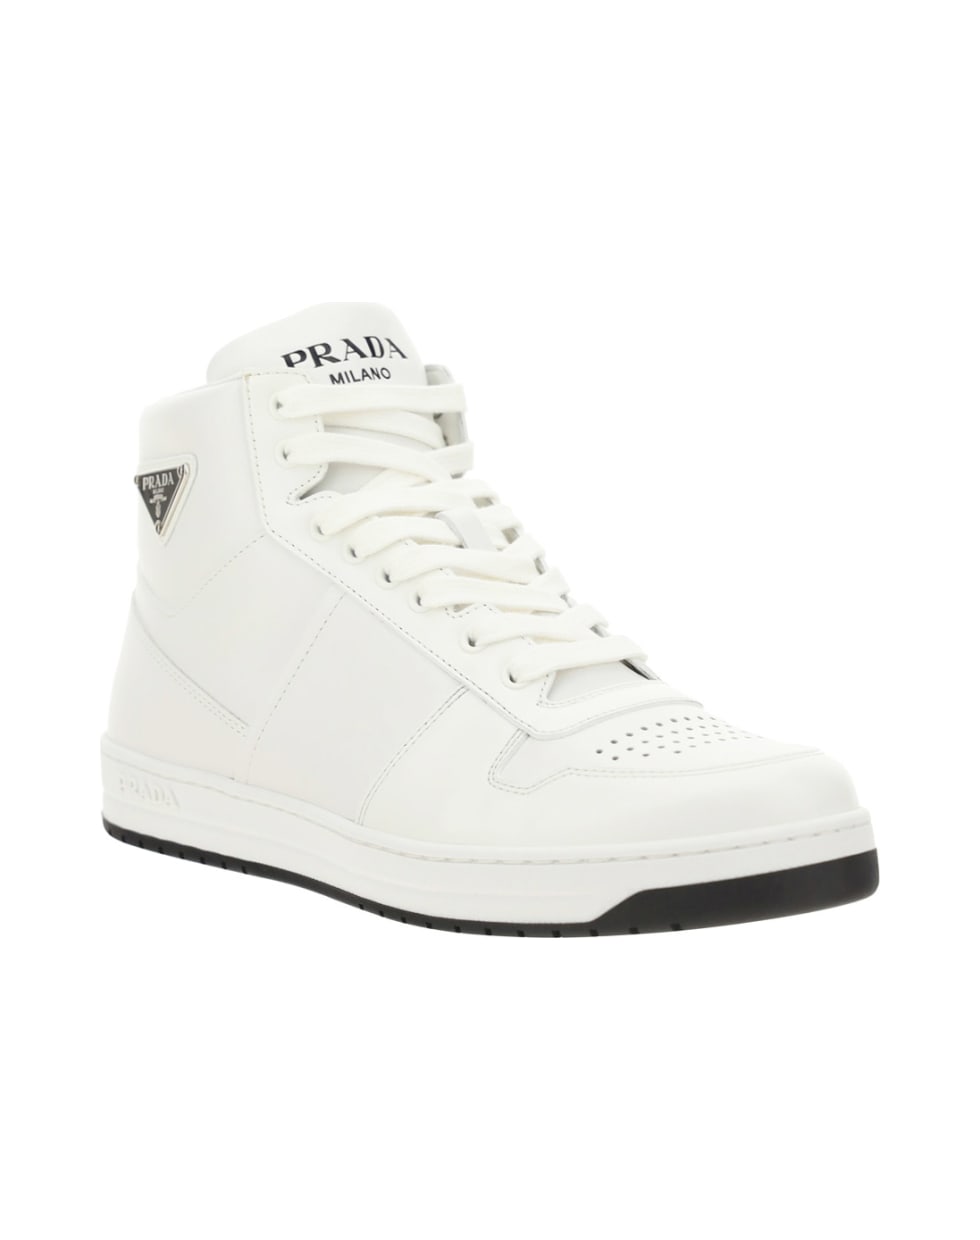 Prada Sneakers - Bianco+nero